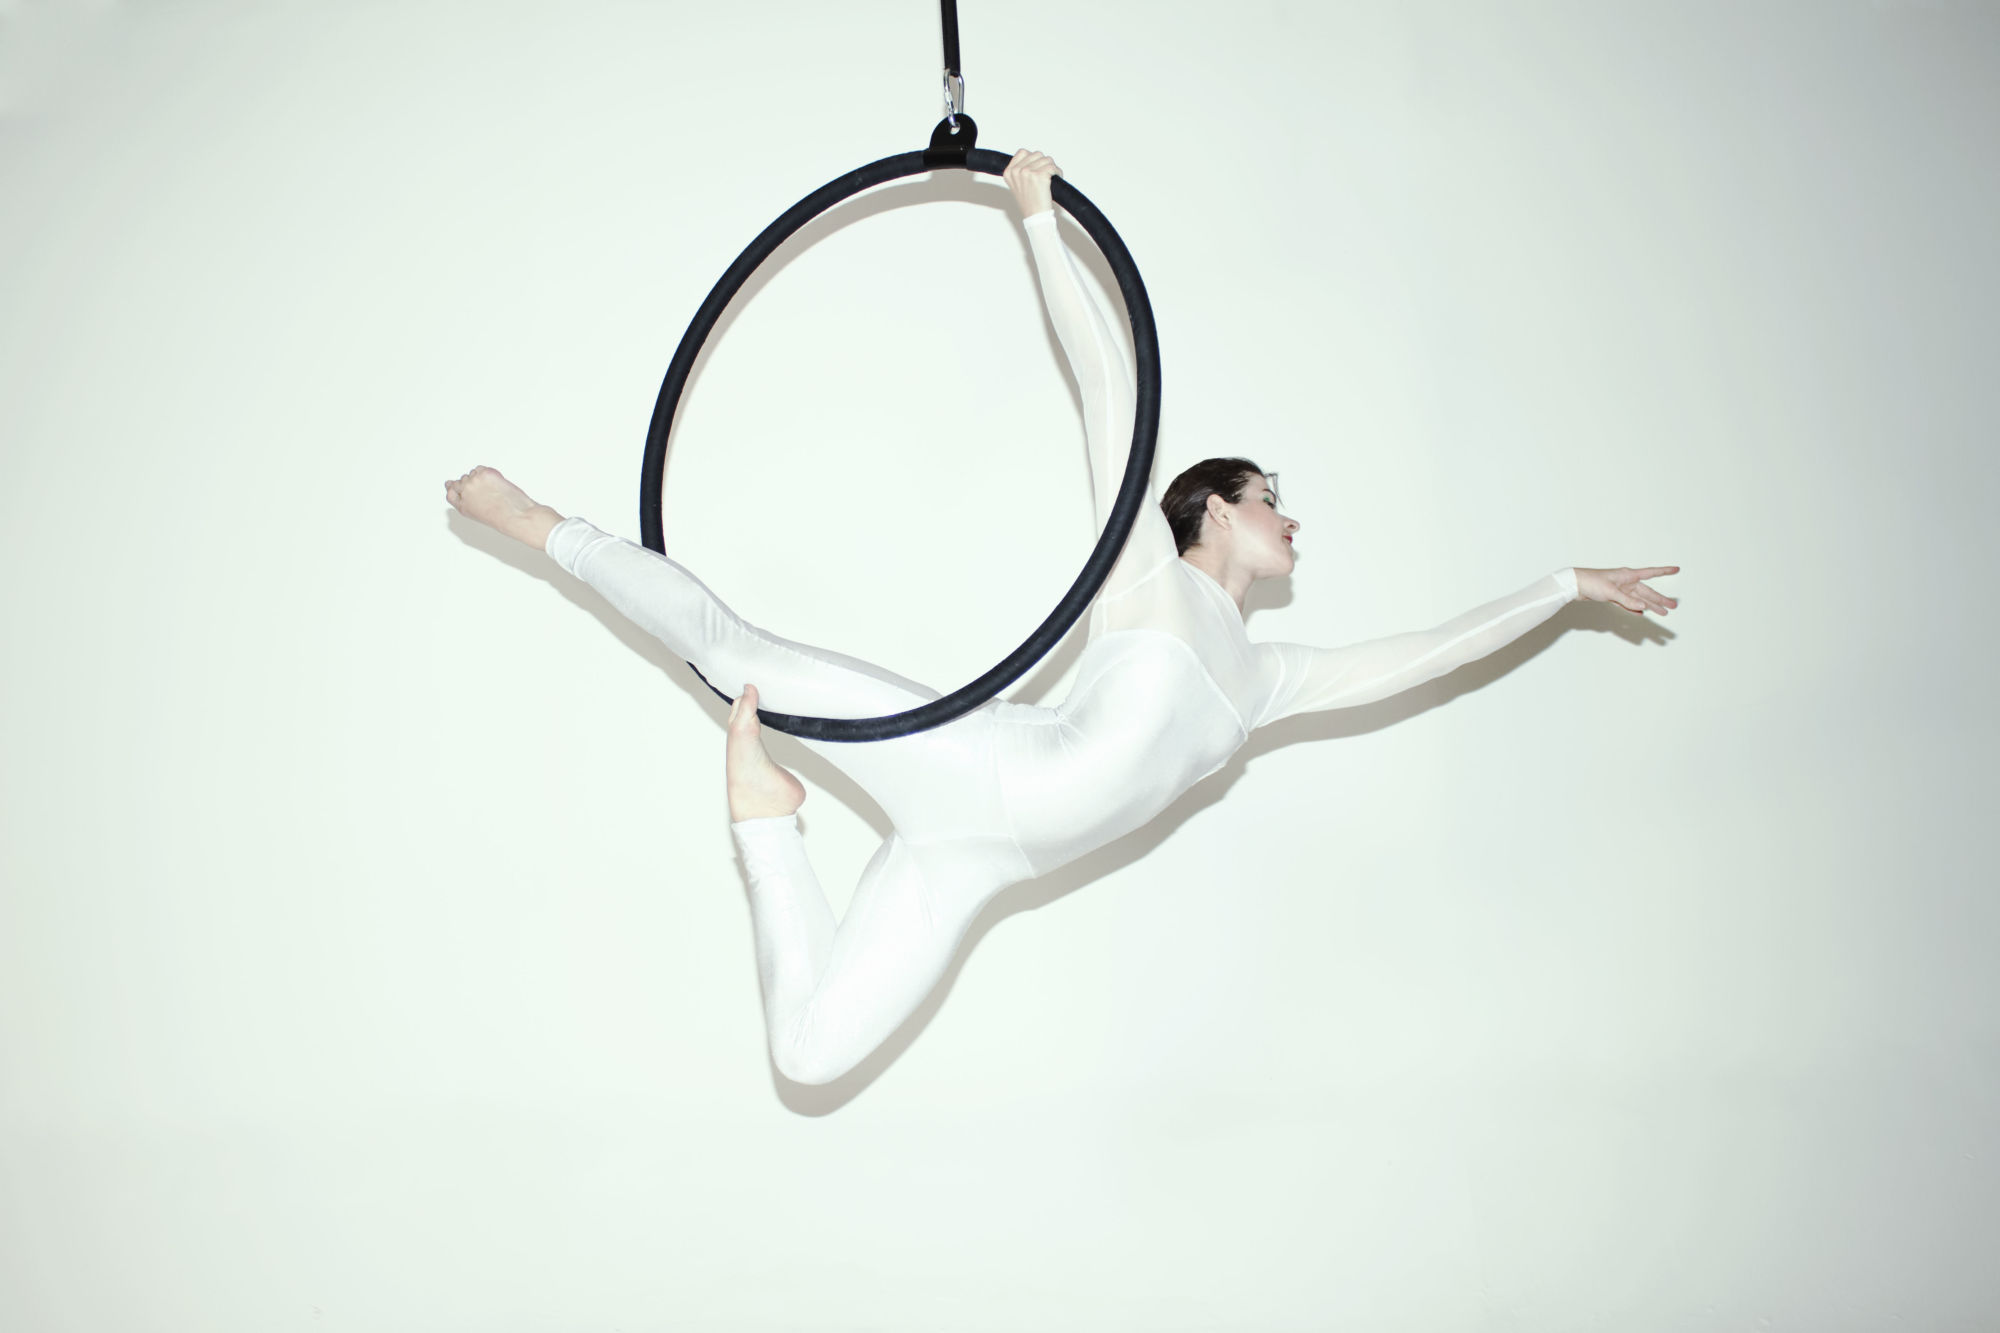 Akrobatické vystoupení - Aerial hoop